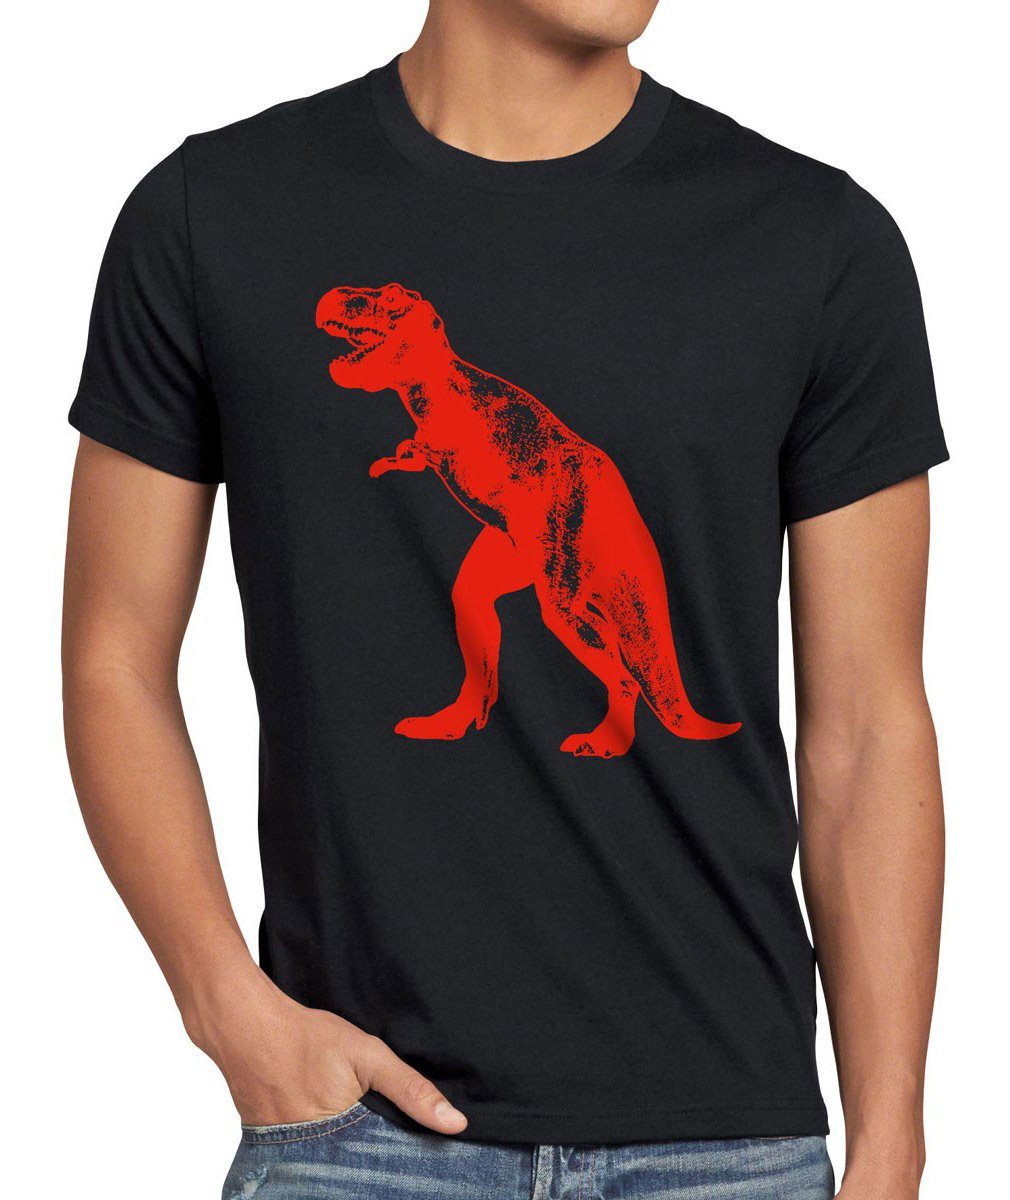 style3 Print-Shirt Herren T-Shirt Dinosaurier Rex Sheldon Cooper Evolution big bang Dino Theory schwarz